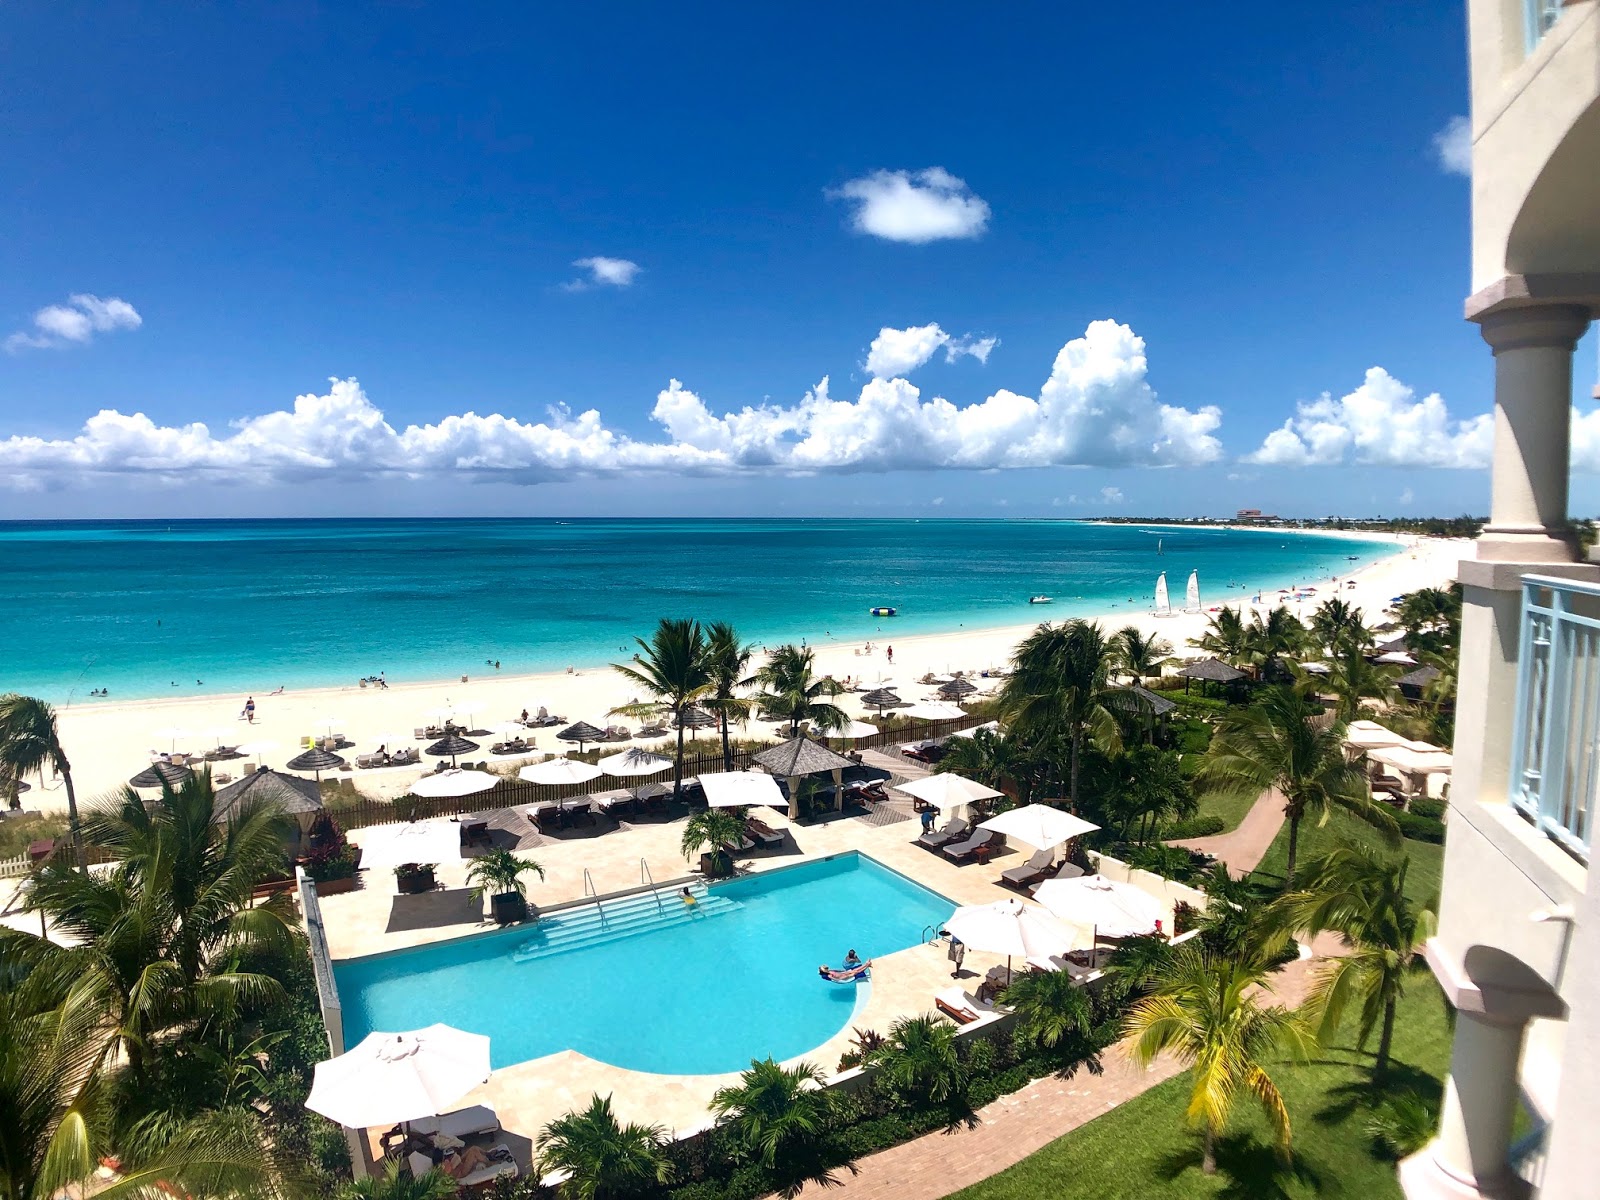 Turks & Caicos Resorts: Review of Seven Stars Resort